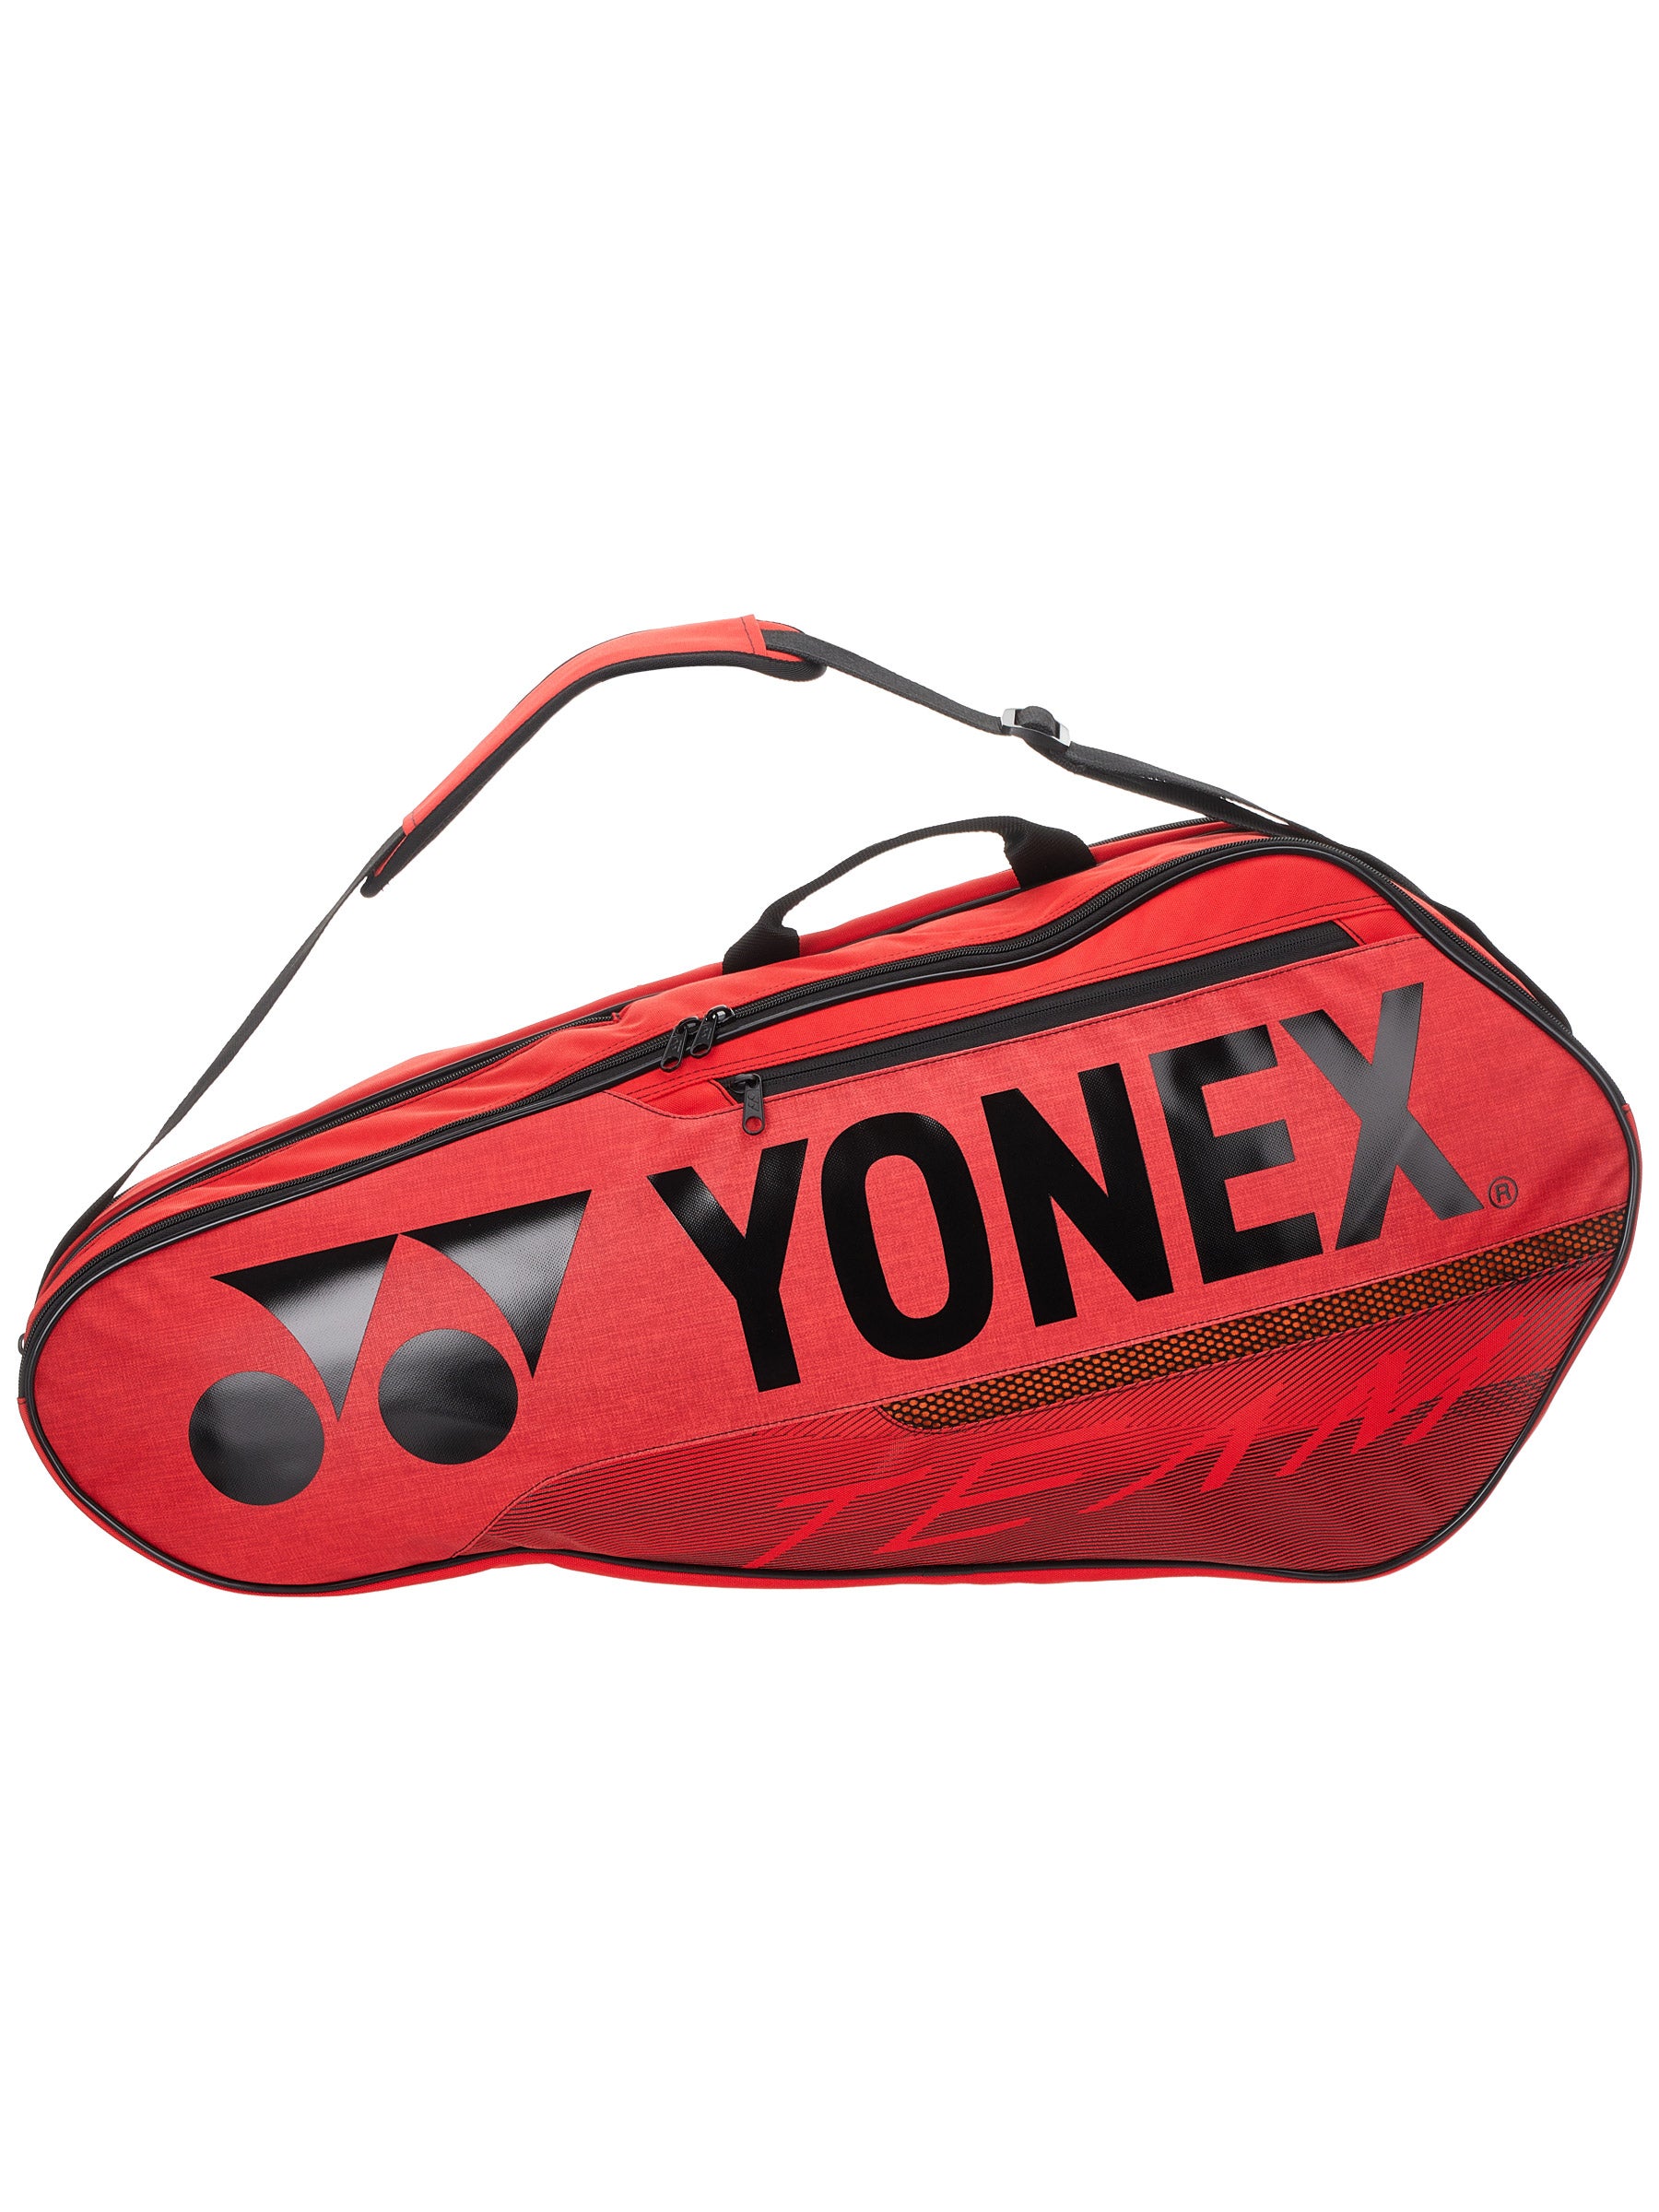 Black/Red 6 Tennis Rackets YONEX Tennis Bag Racket Bag 6 Backpack BAG1922R 